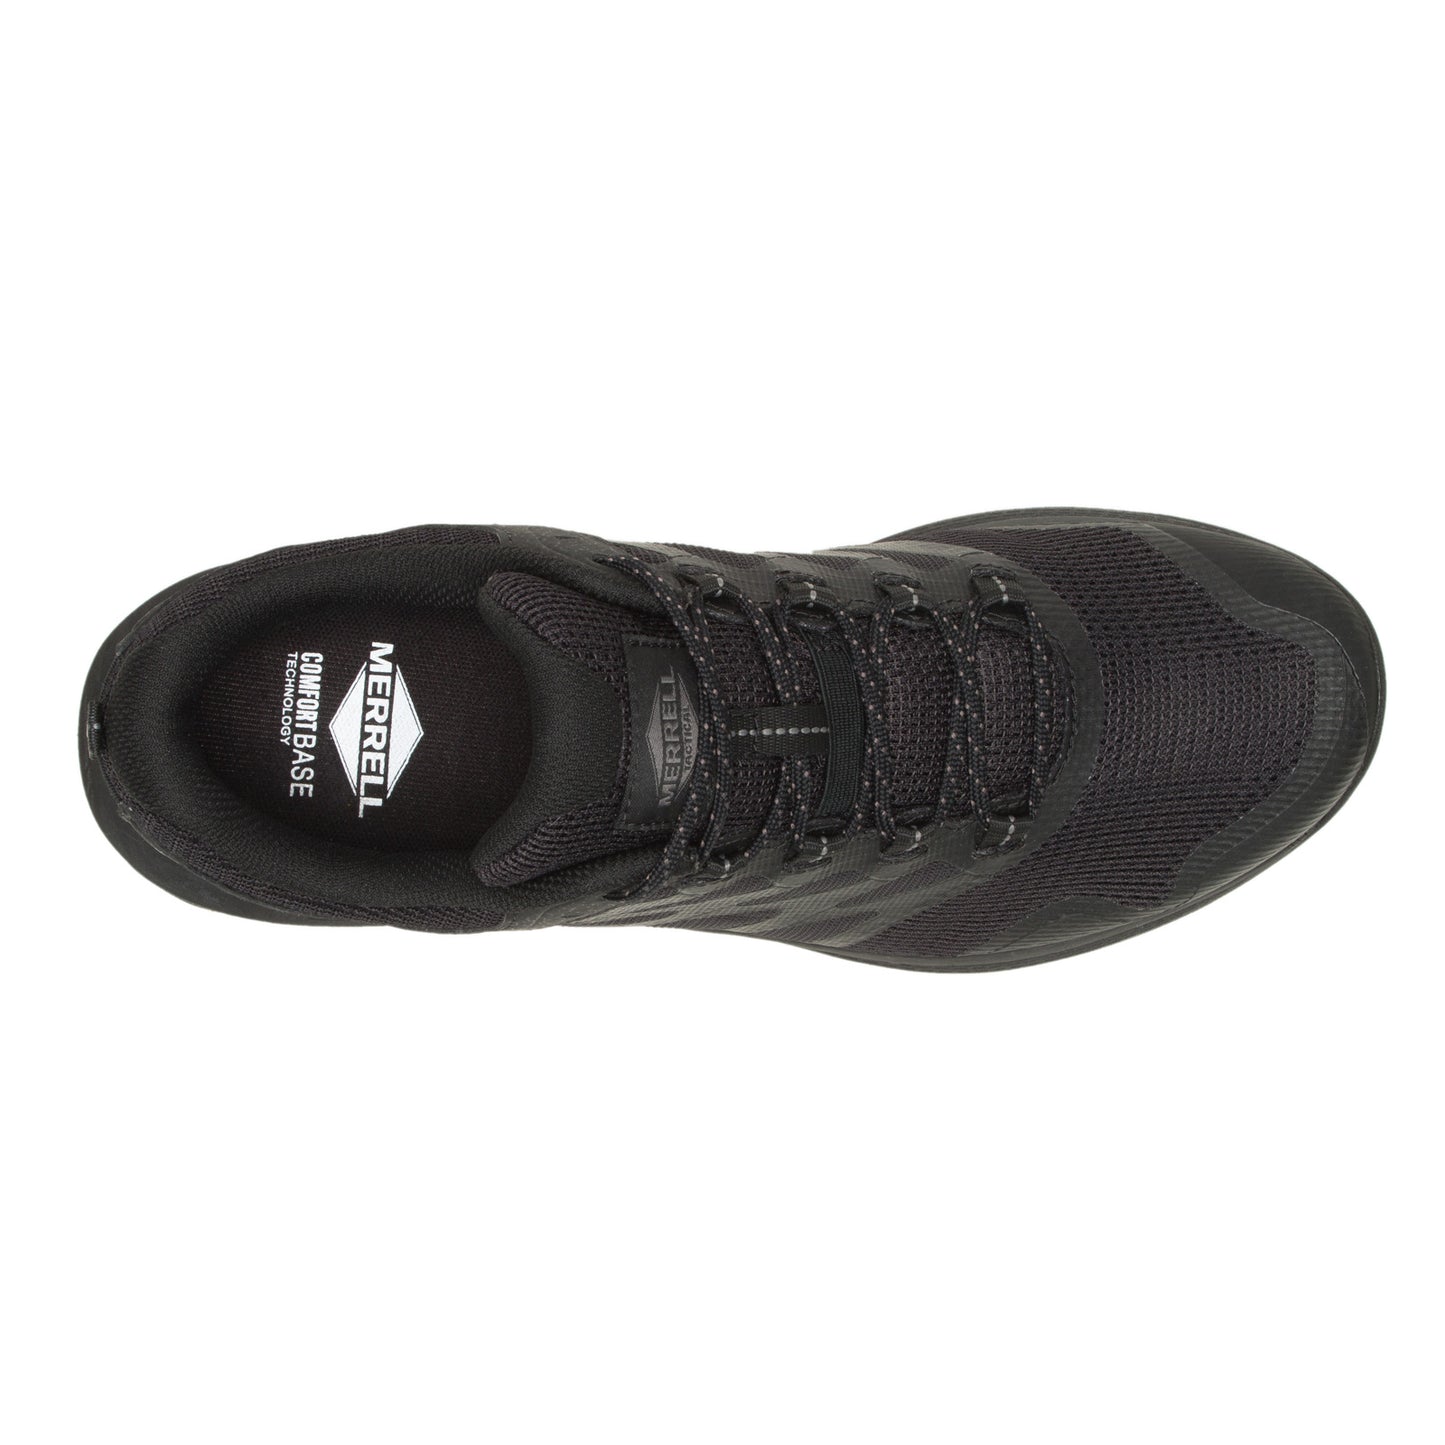 Peltz Shoes  Men's Merrell Nova 3 Low Tactical Hiking Shoe - Wide Width Black J005043W